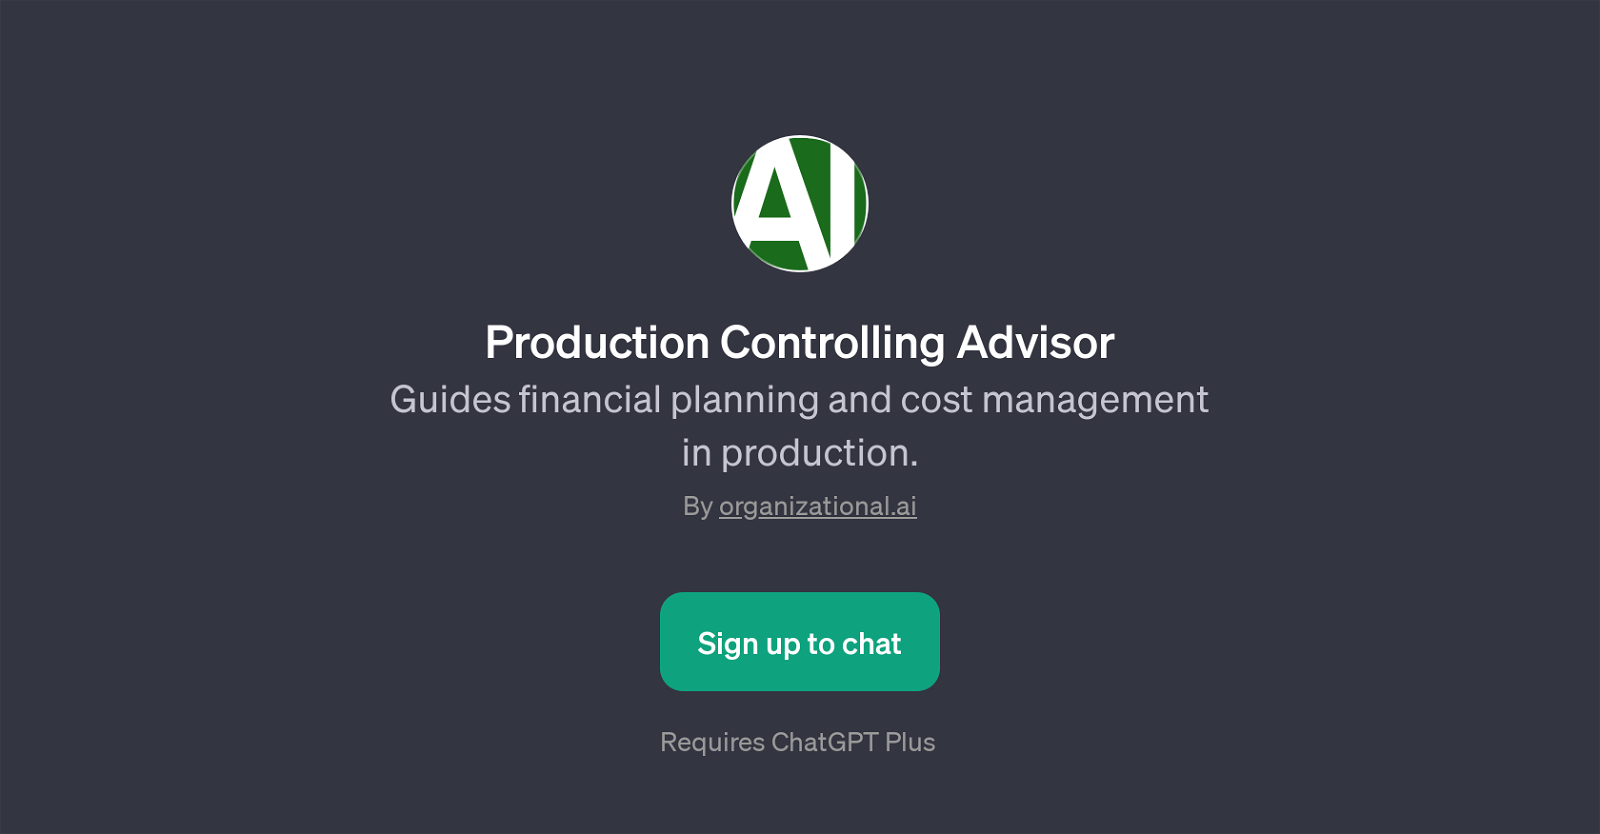 Production Controlling Advisor website